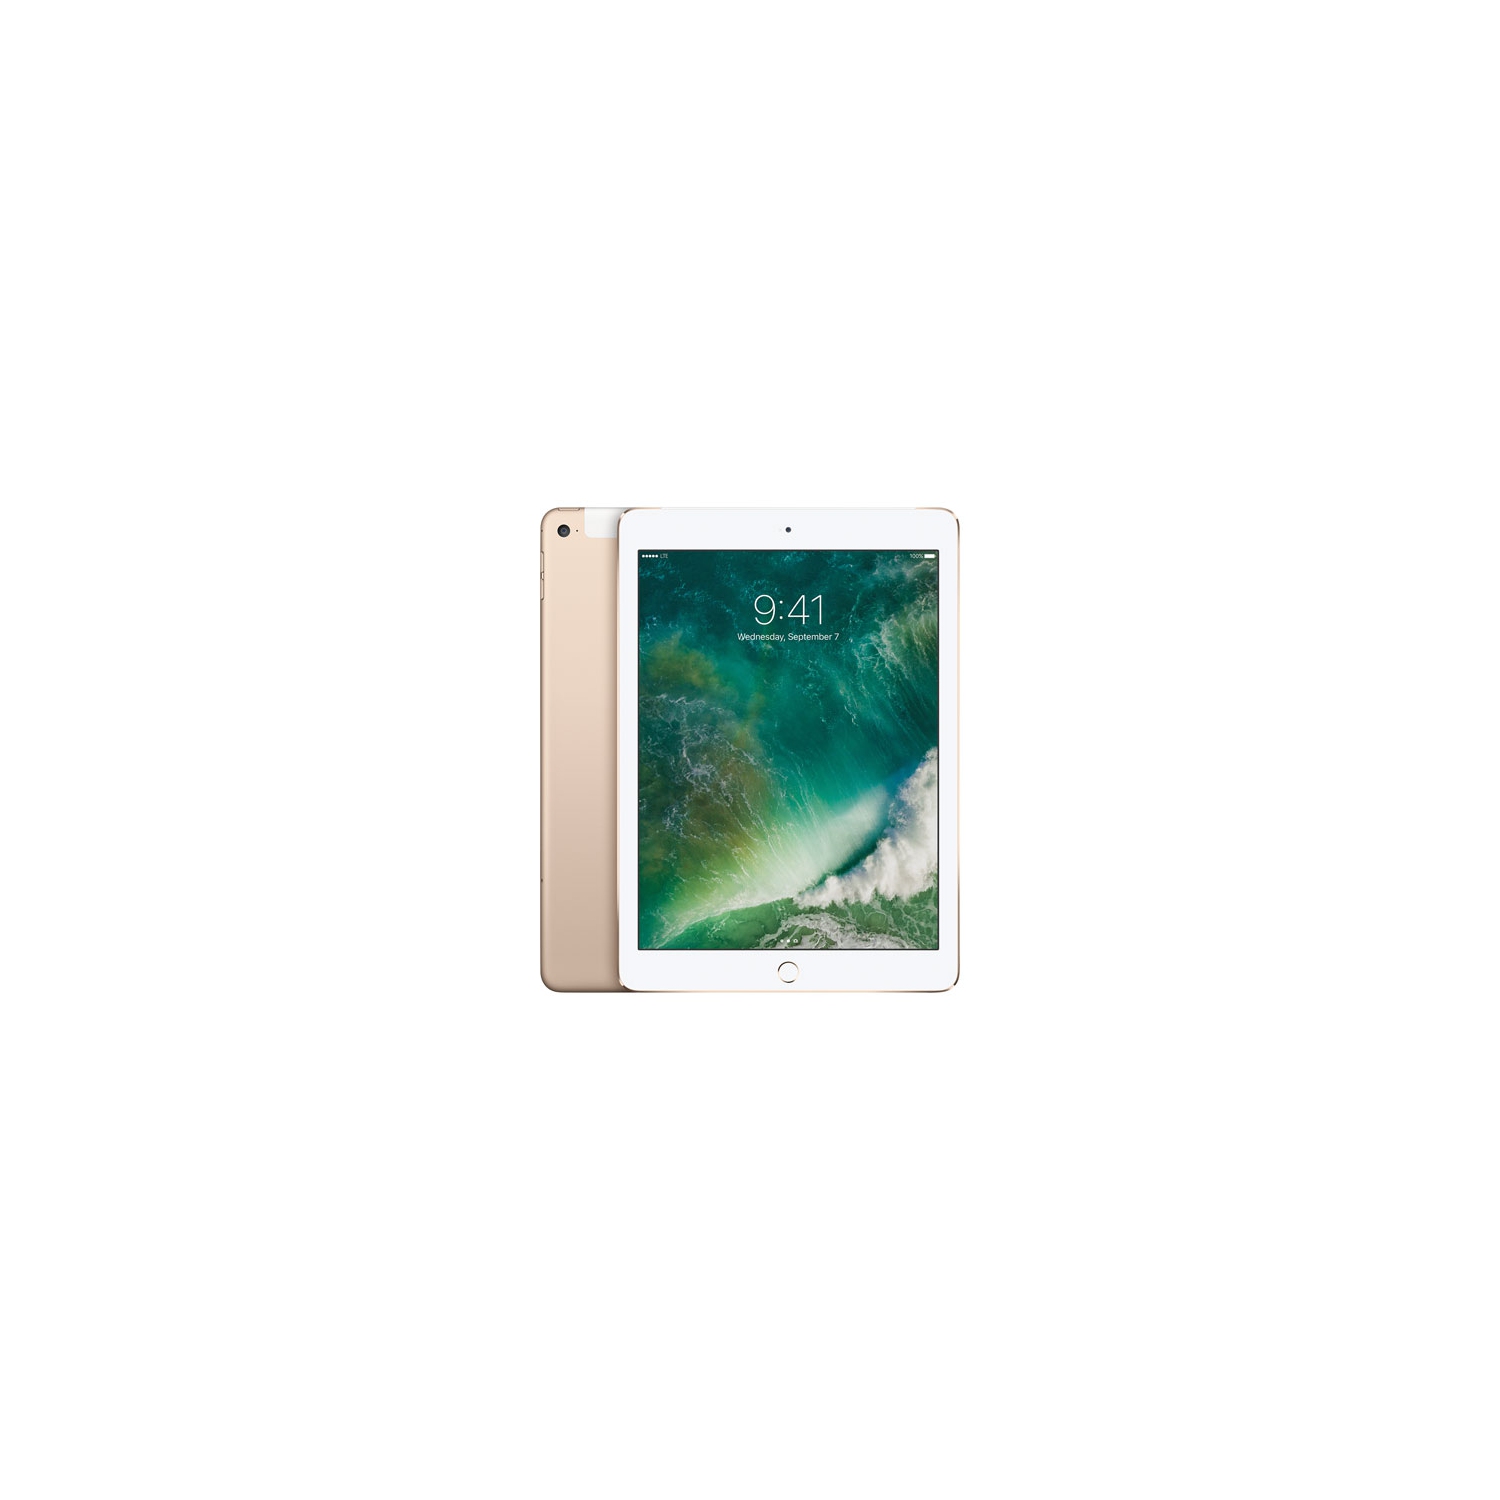 Refurbished (Fair) - Apple iPad Air 2 64GB With Wi-Fi + Cellular - Gold